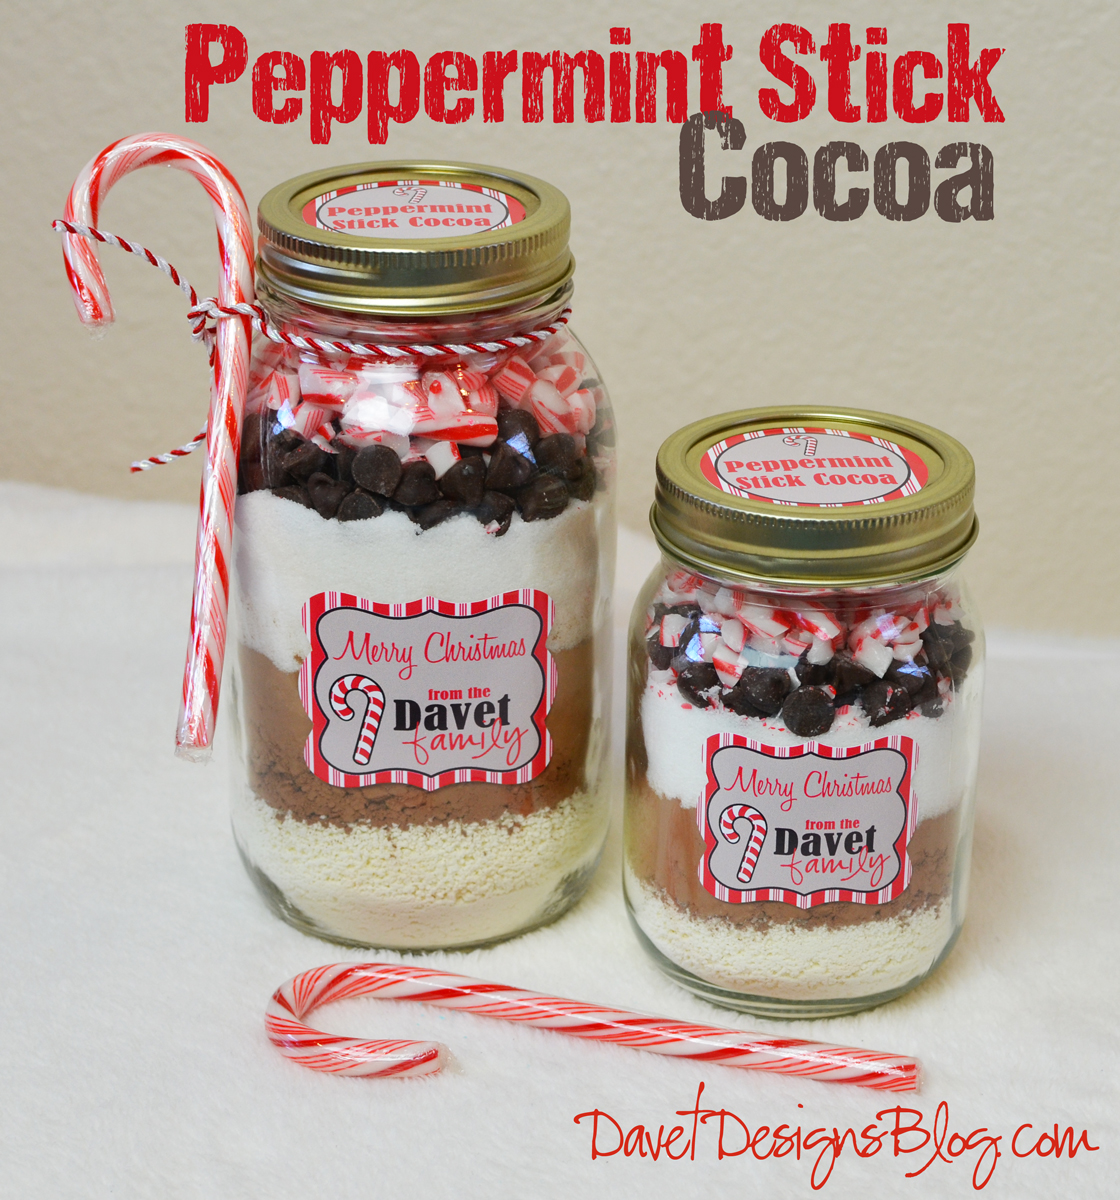 Peppermint Stick Cocoa in a jar